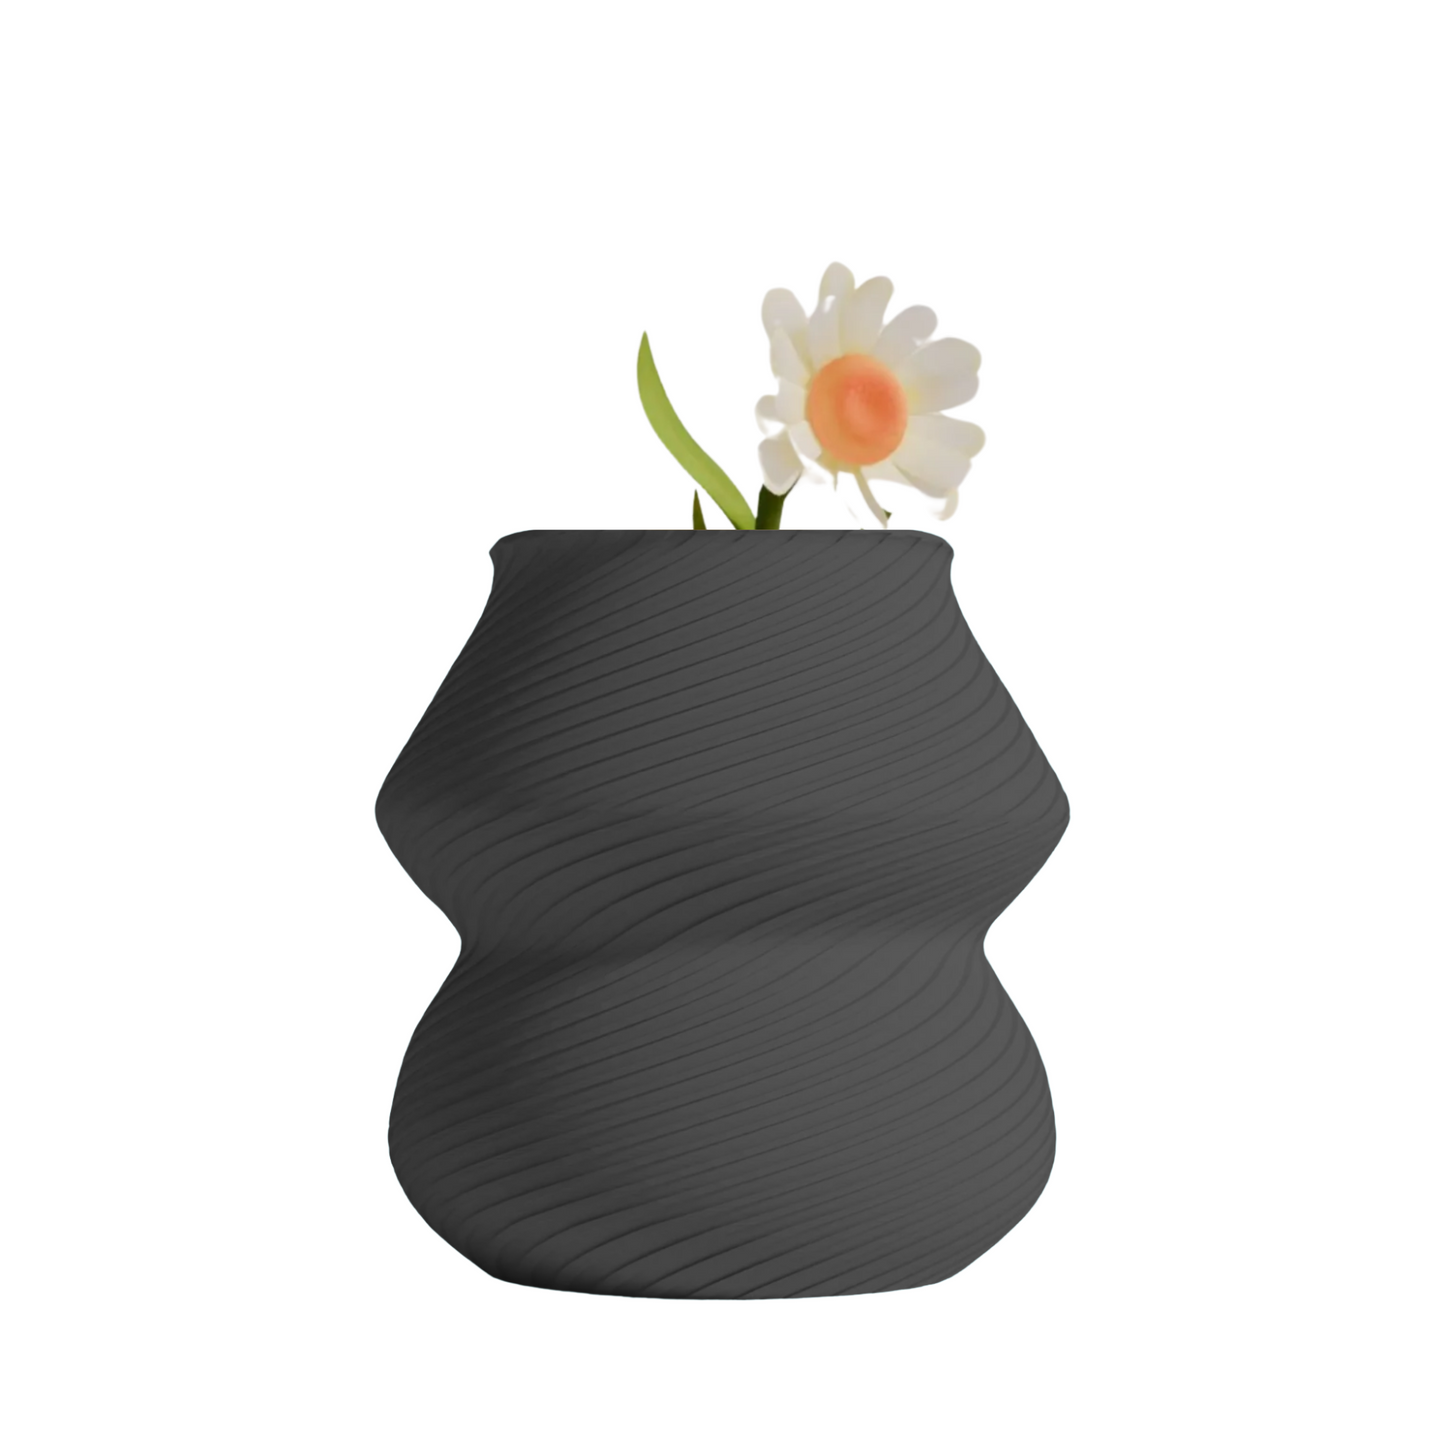 Modena design vase black edition